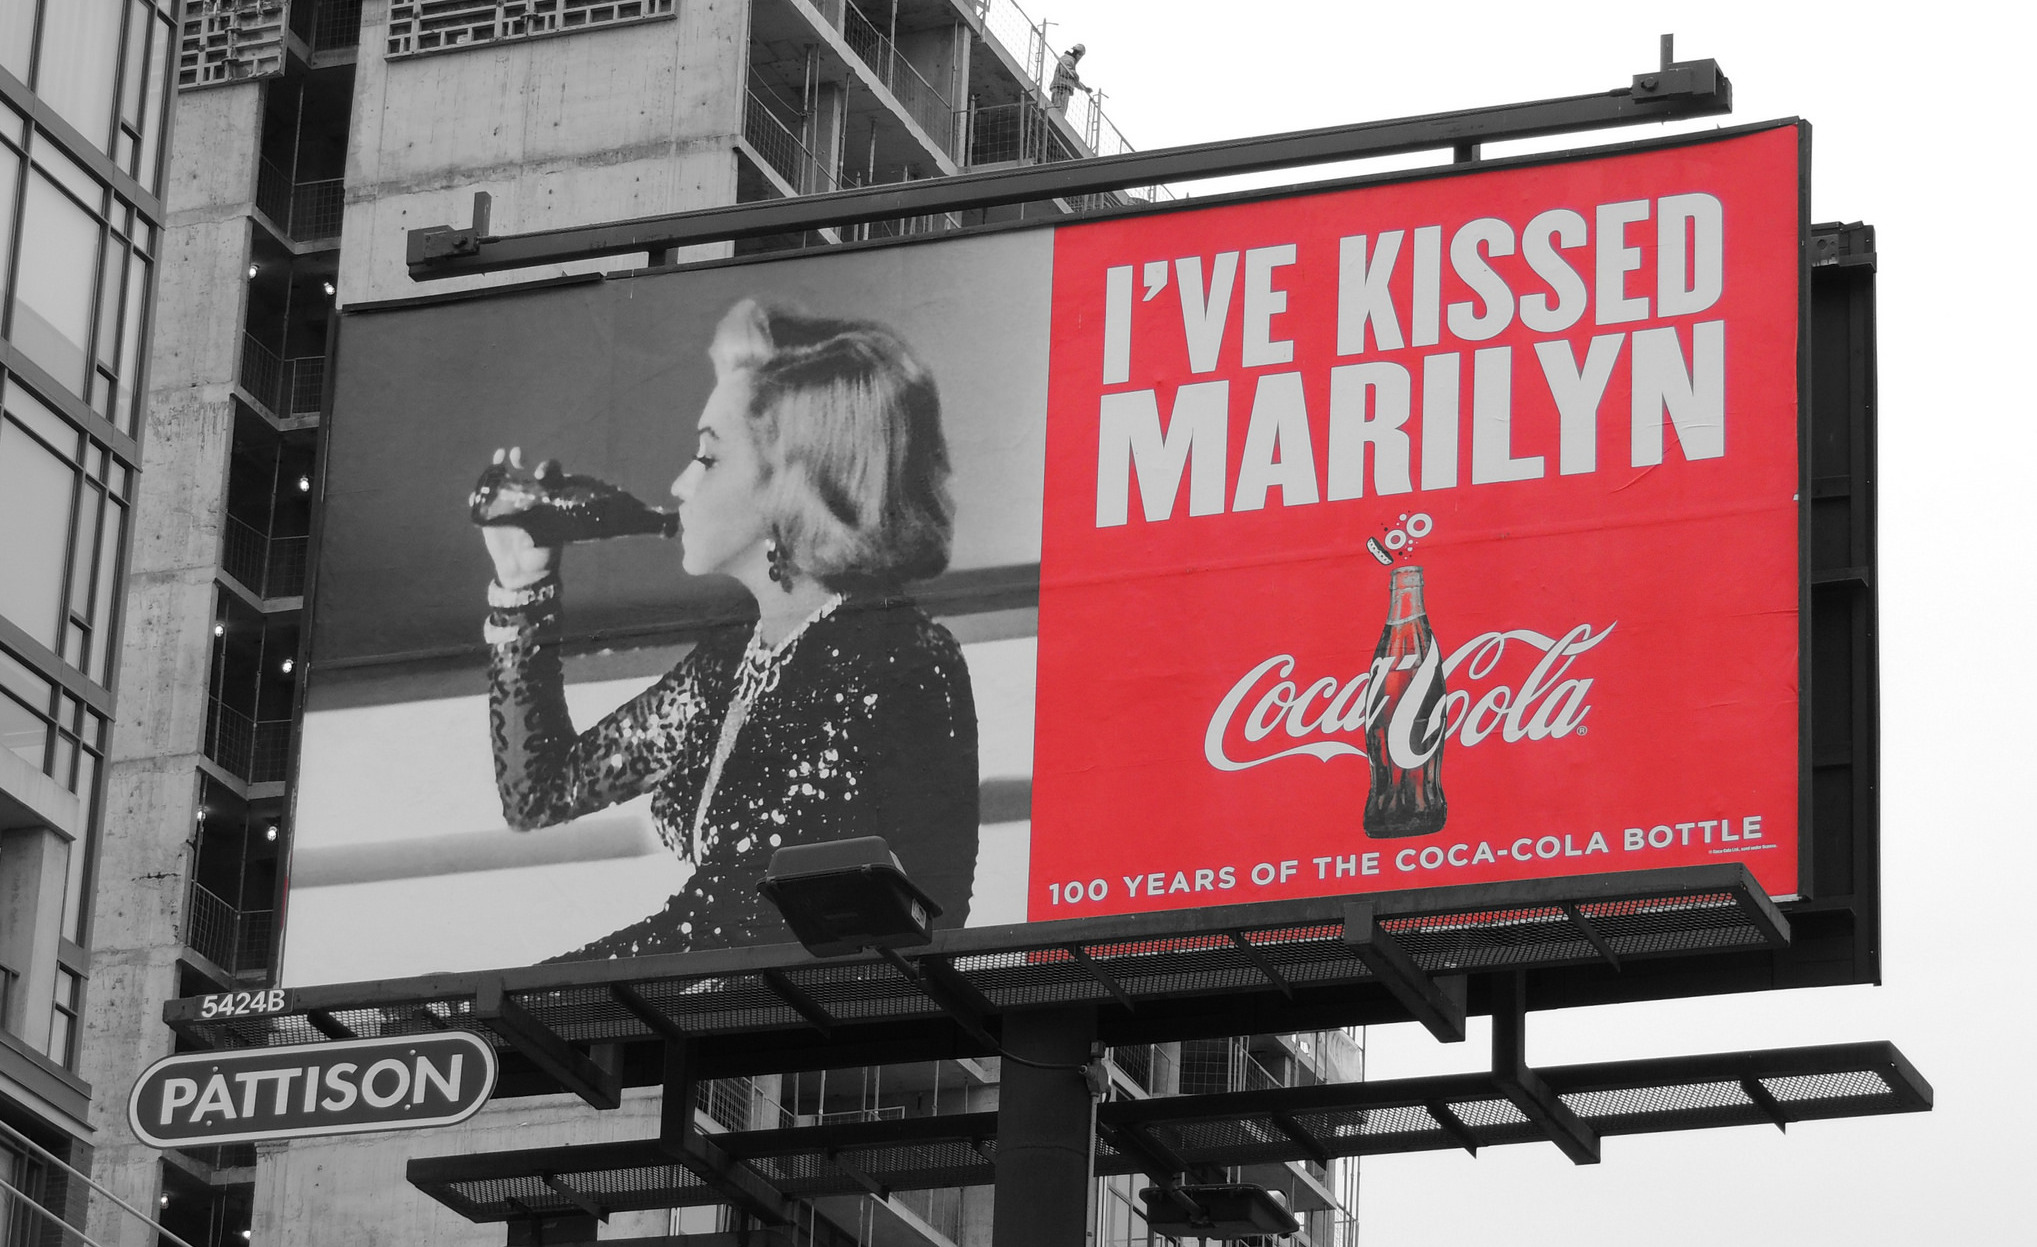 Coca-Cola w jubileuszowej kampanii Coca-Cola mediarun com cola marylin